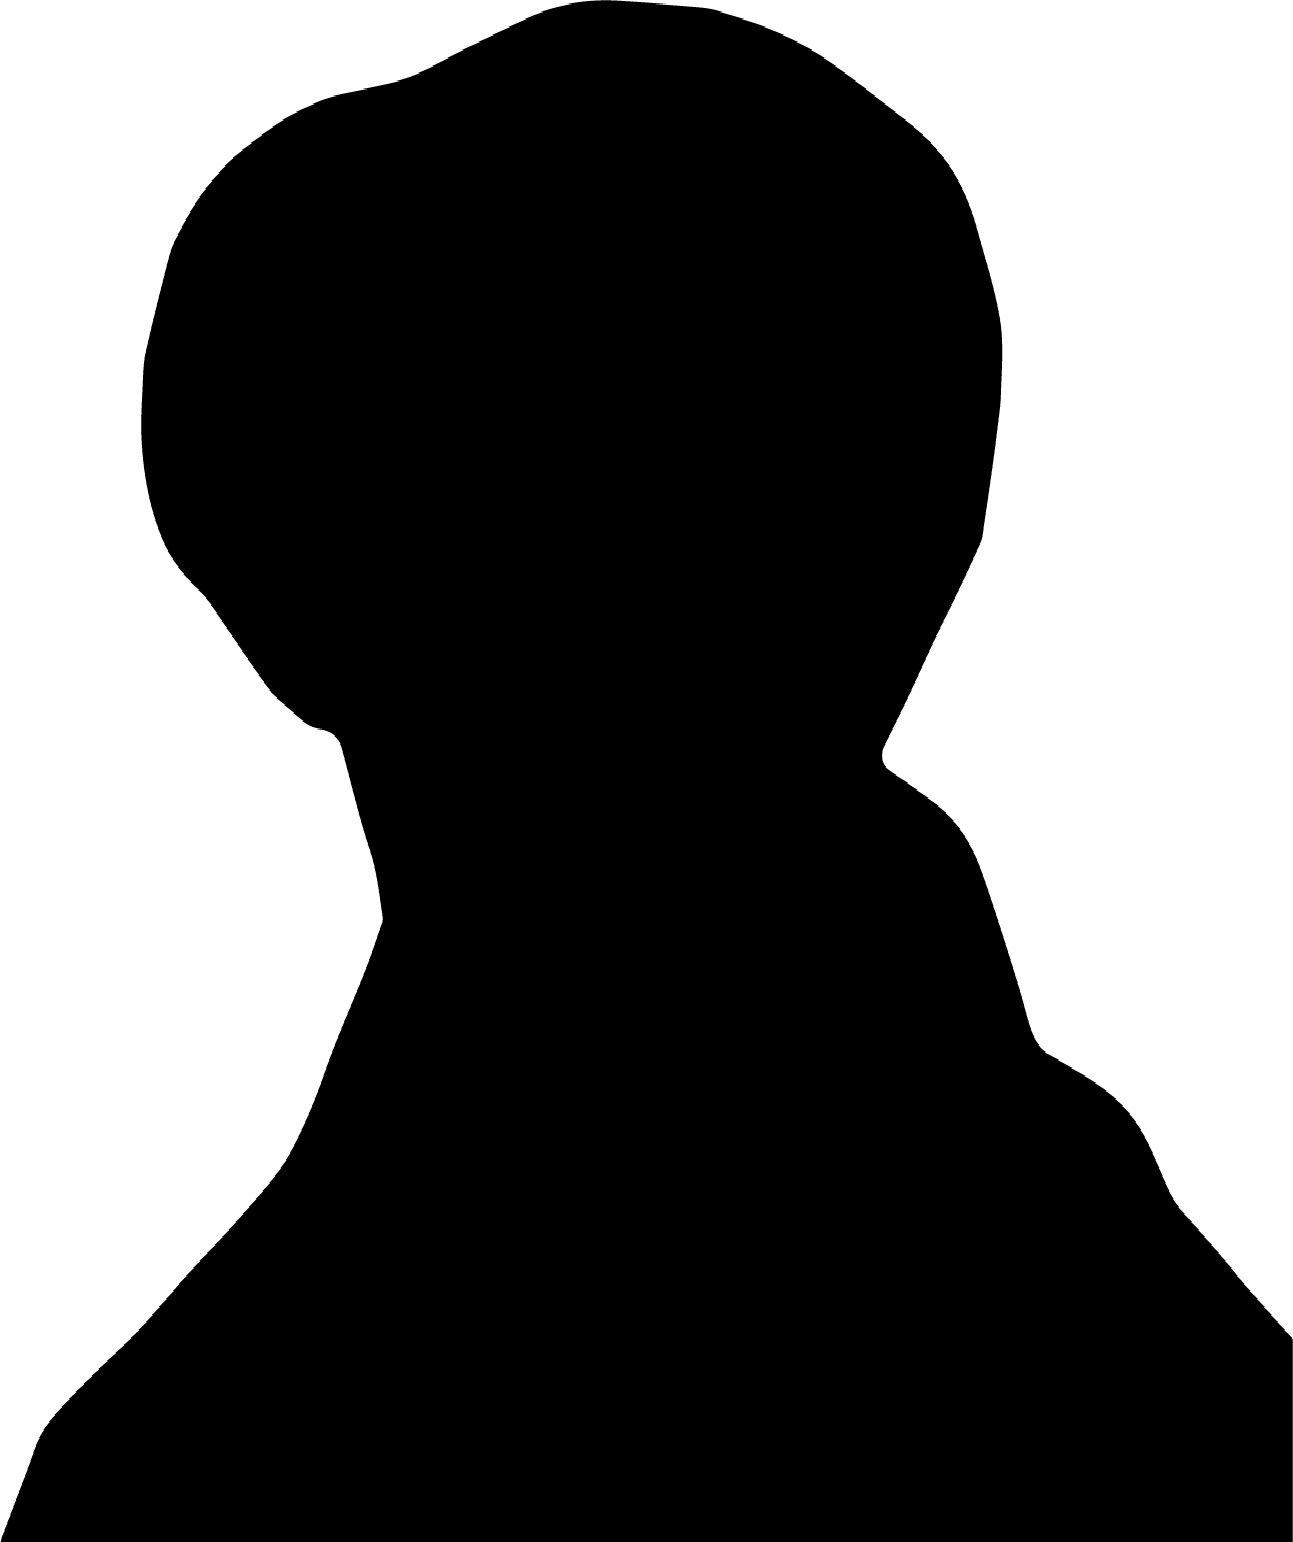 Black silhouette of Lady Frances Balfour